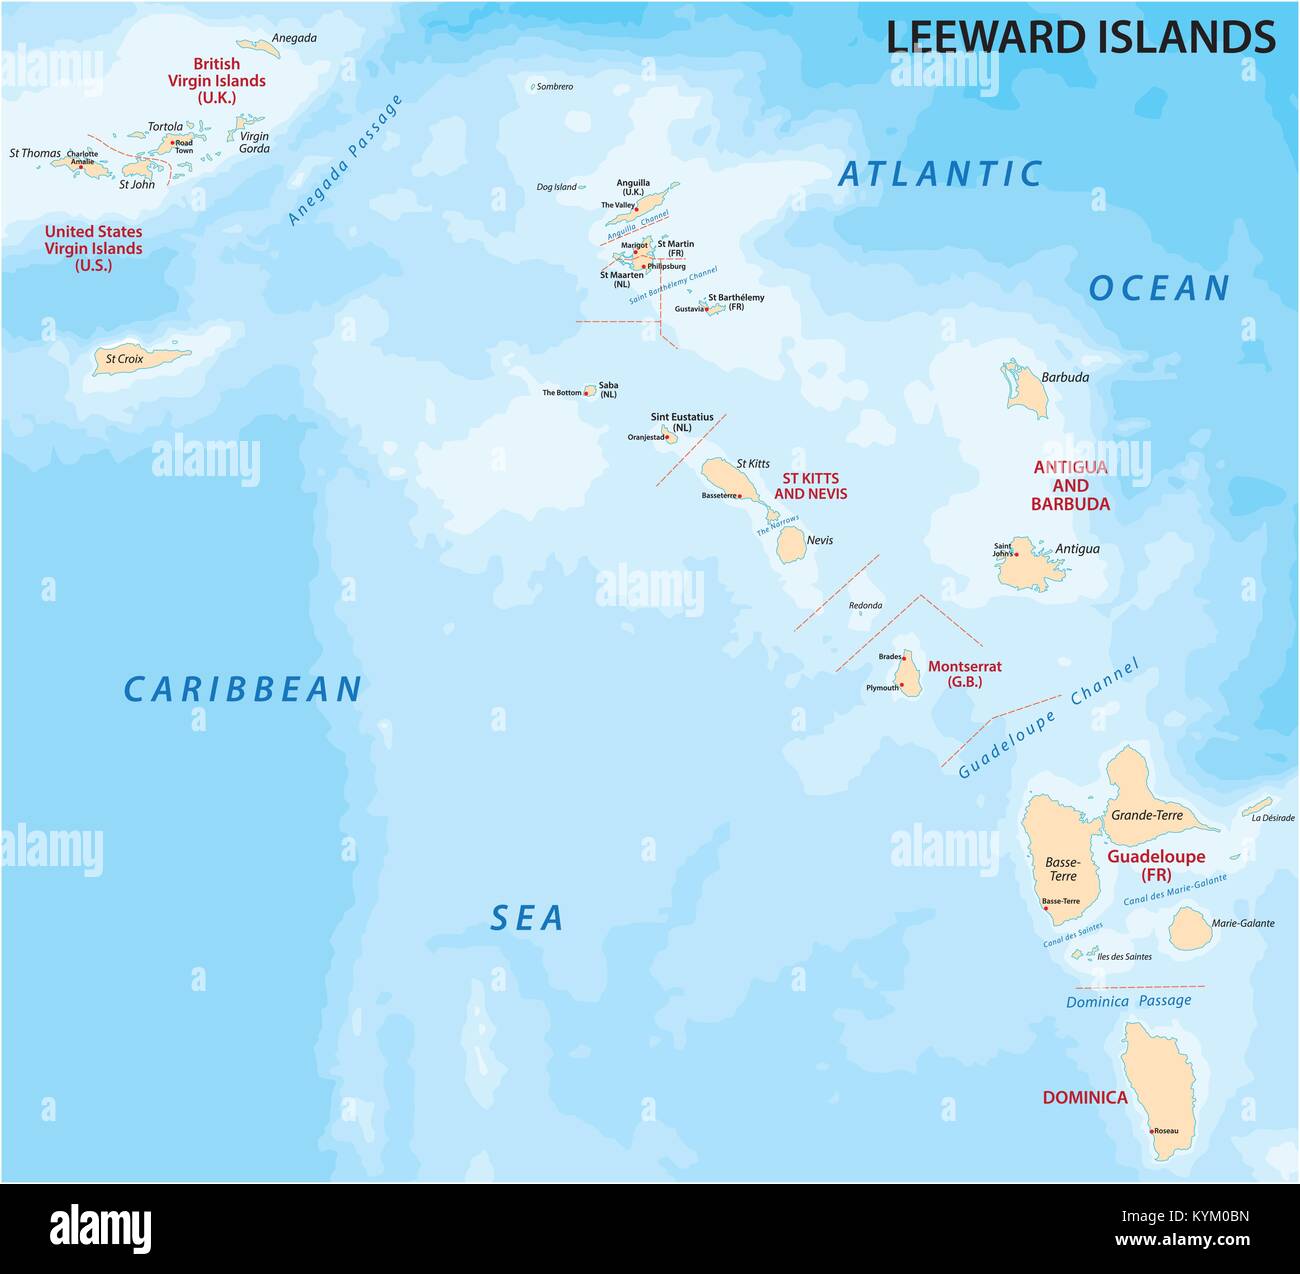 Map of leeward islands, Caribbean island group Stock Vector Art ...